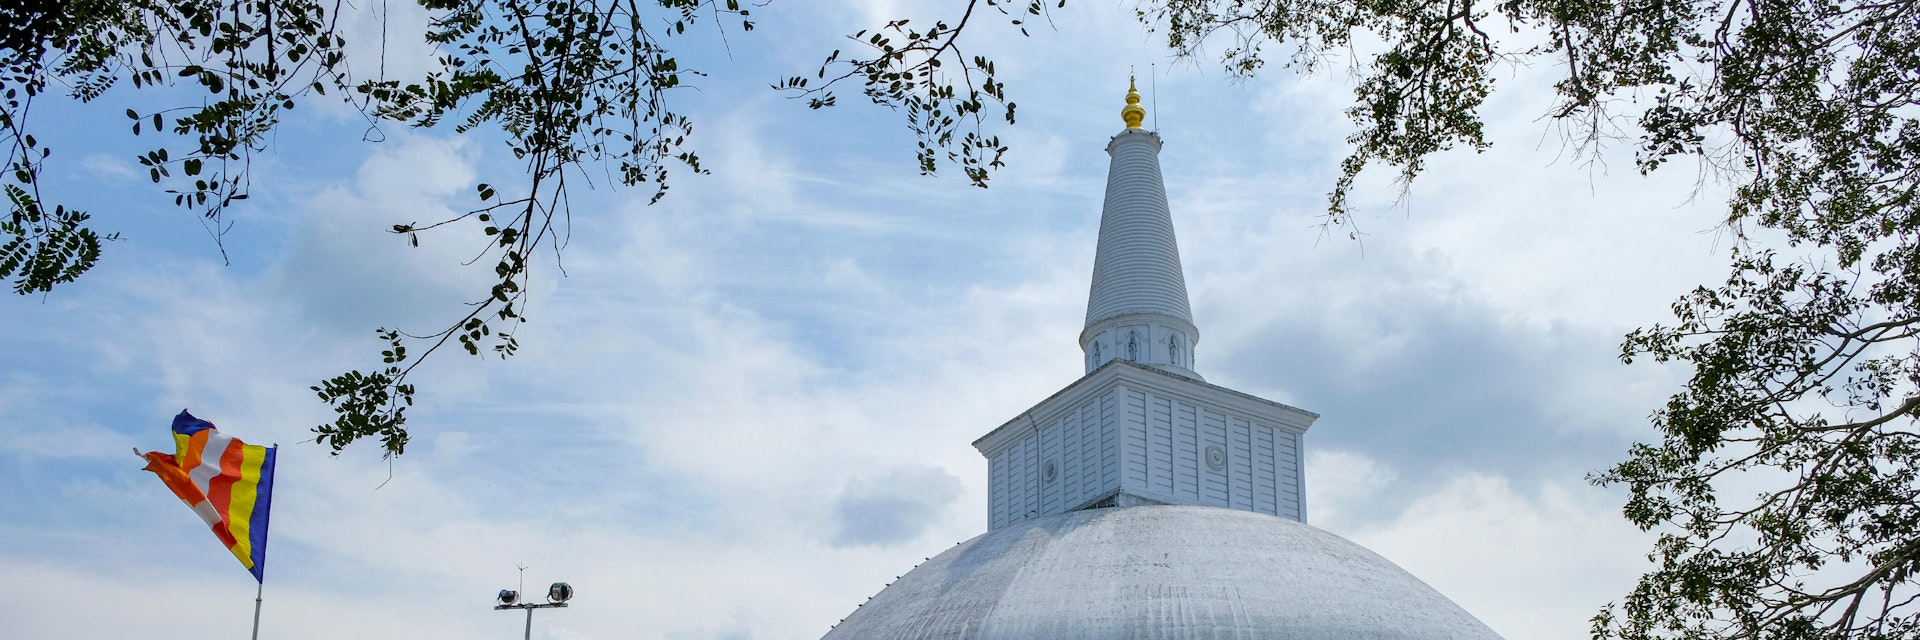 Buddhist stupa Ruvanvelisaya Dagoba in Anuradhapura, Sri Lanka.